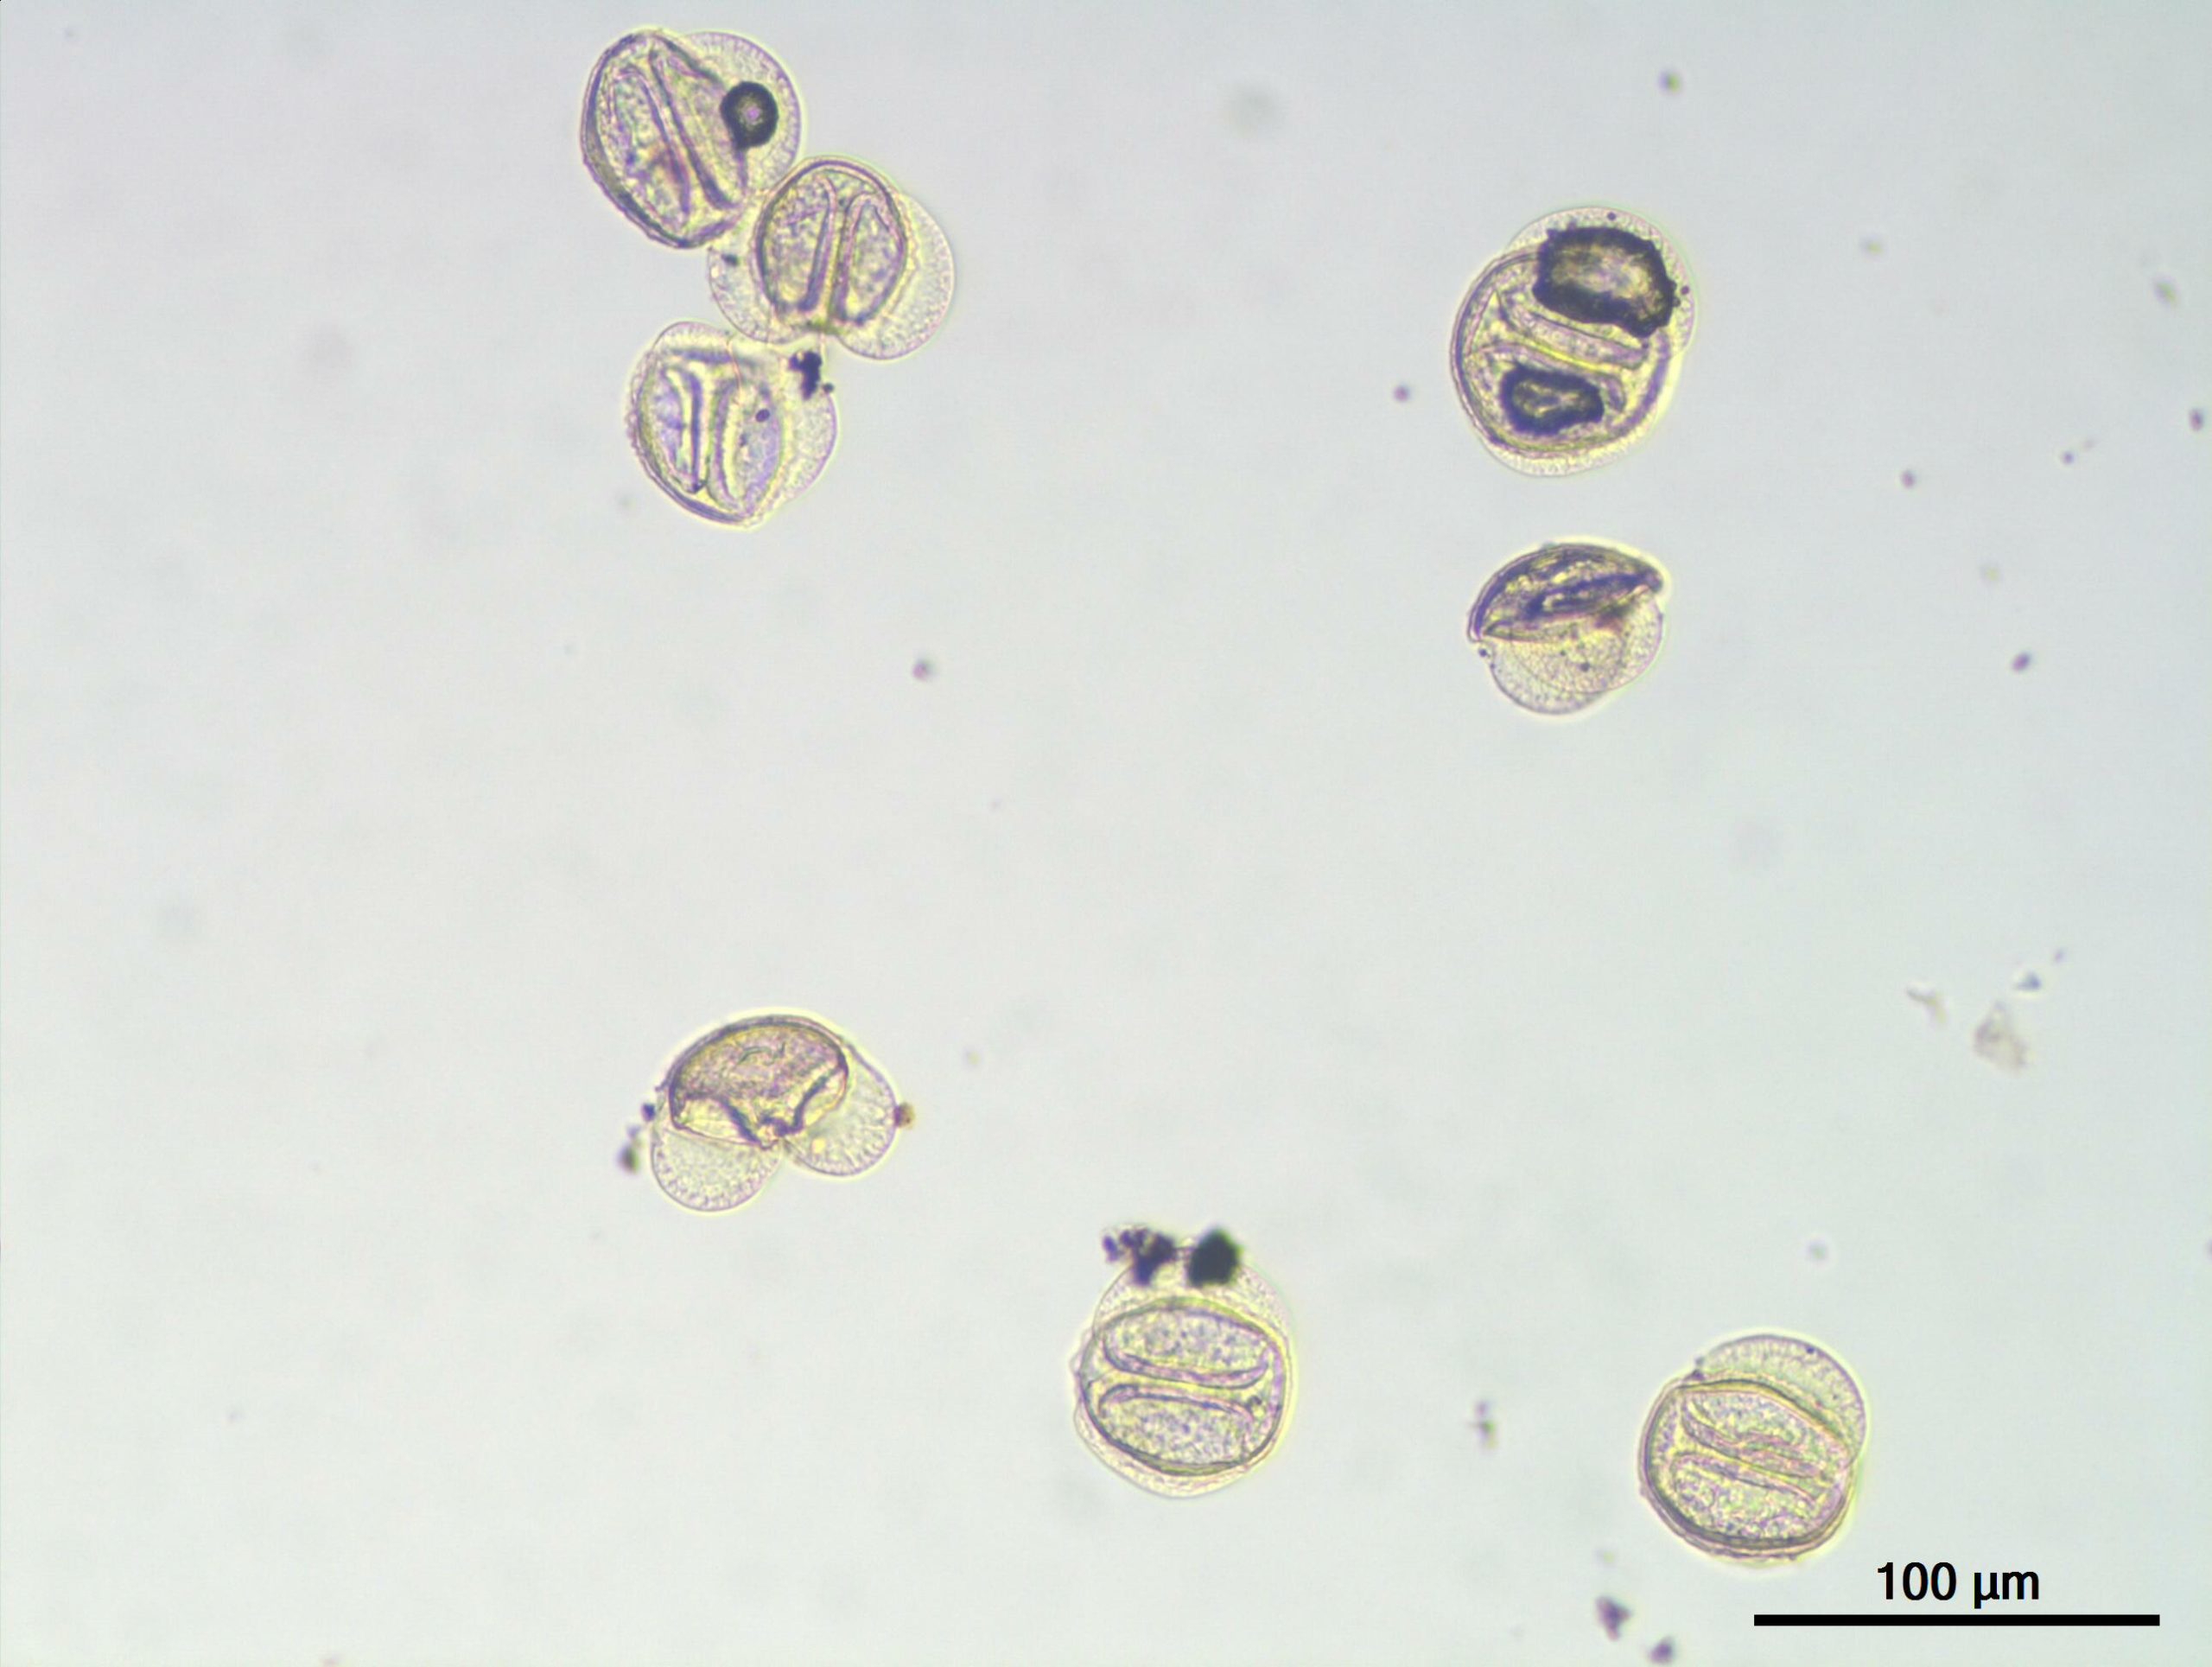 Tree Pollen Under A Microscope